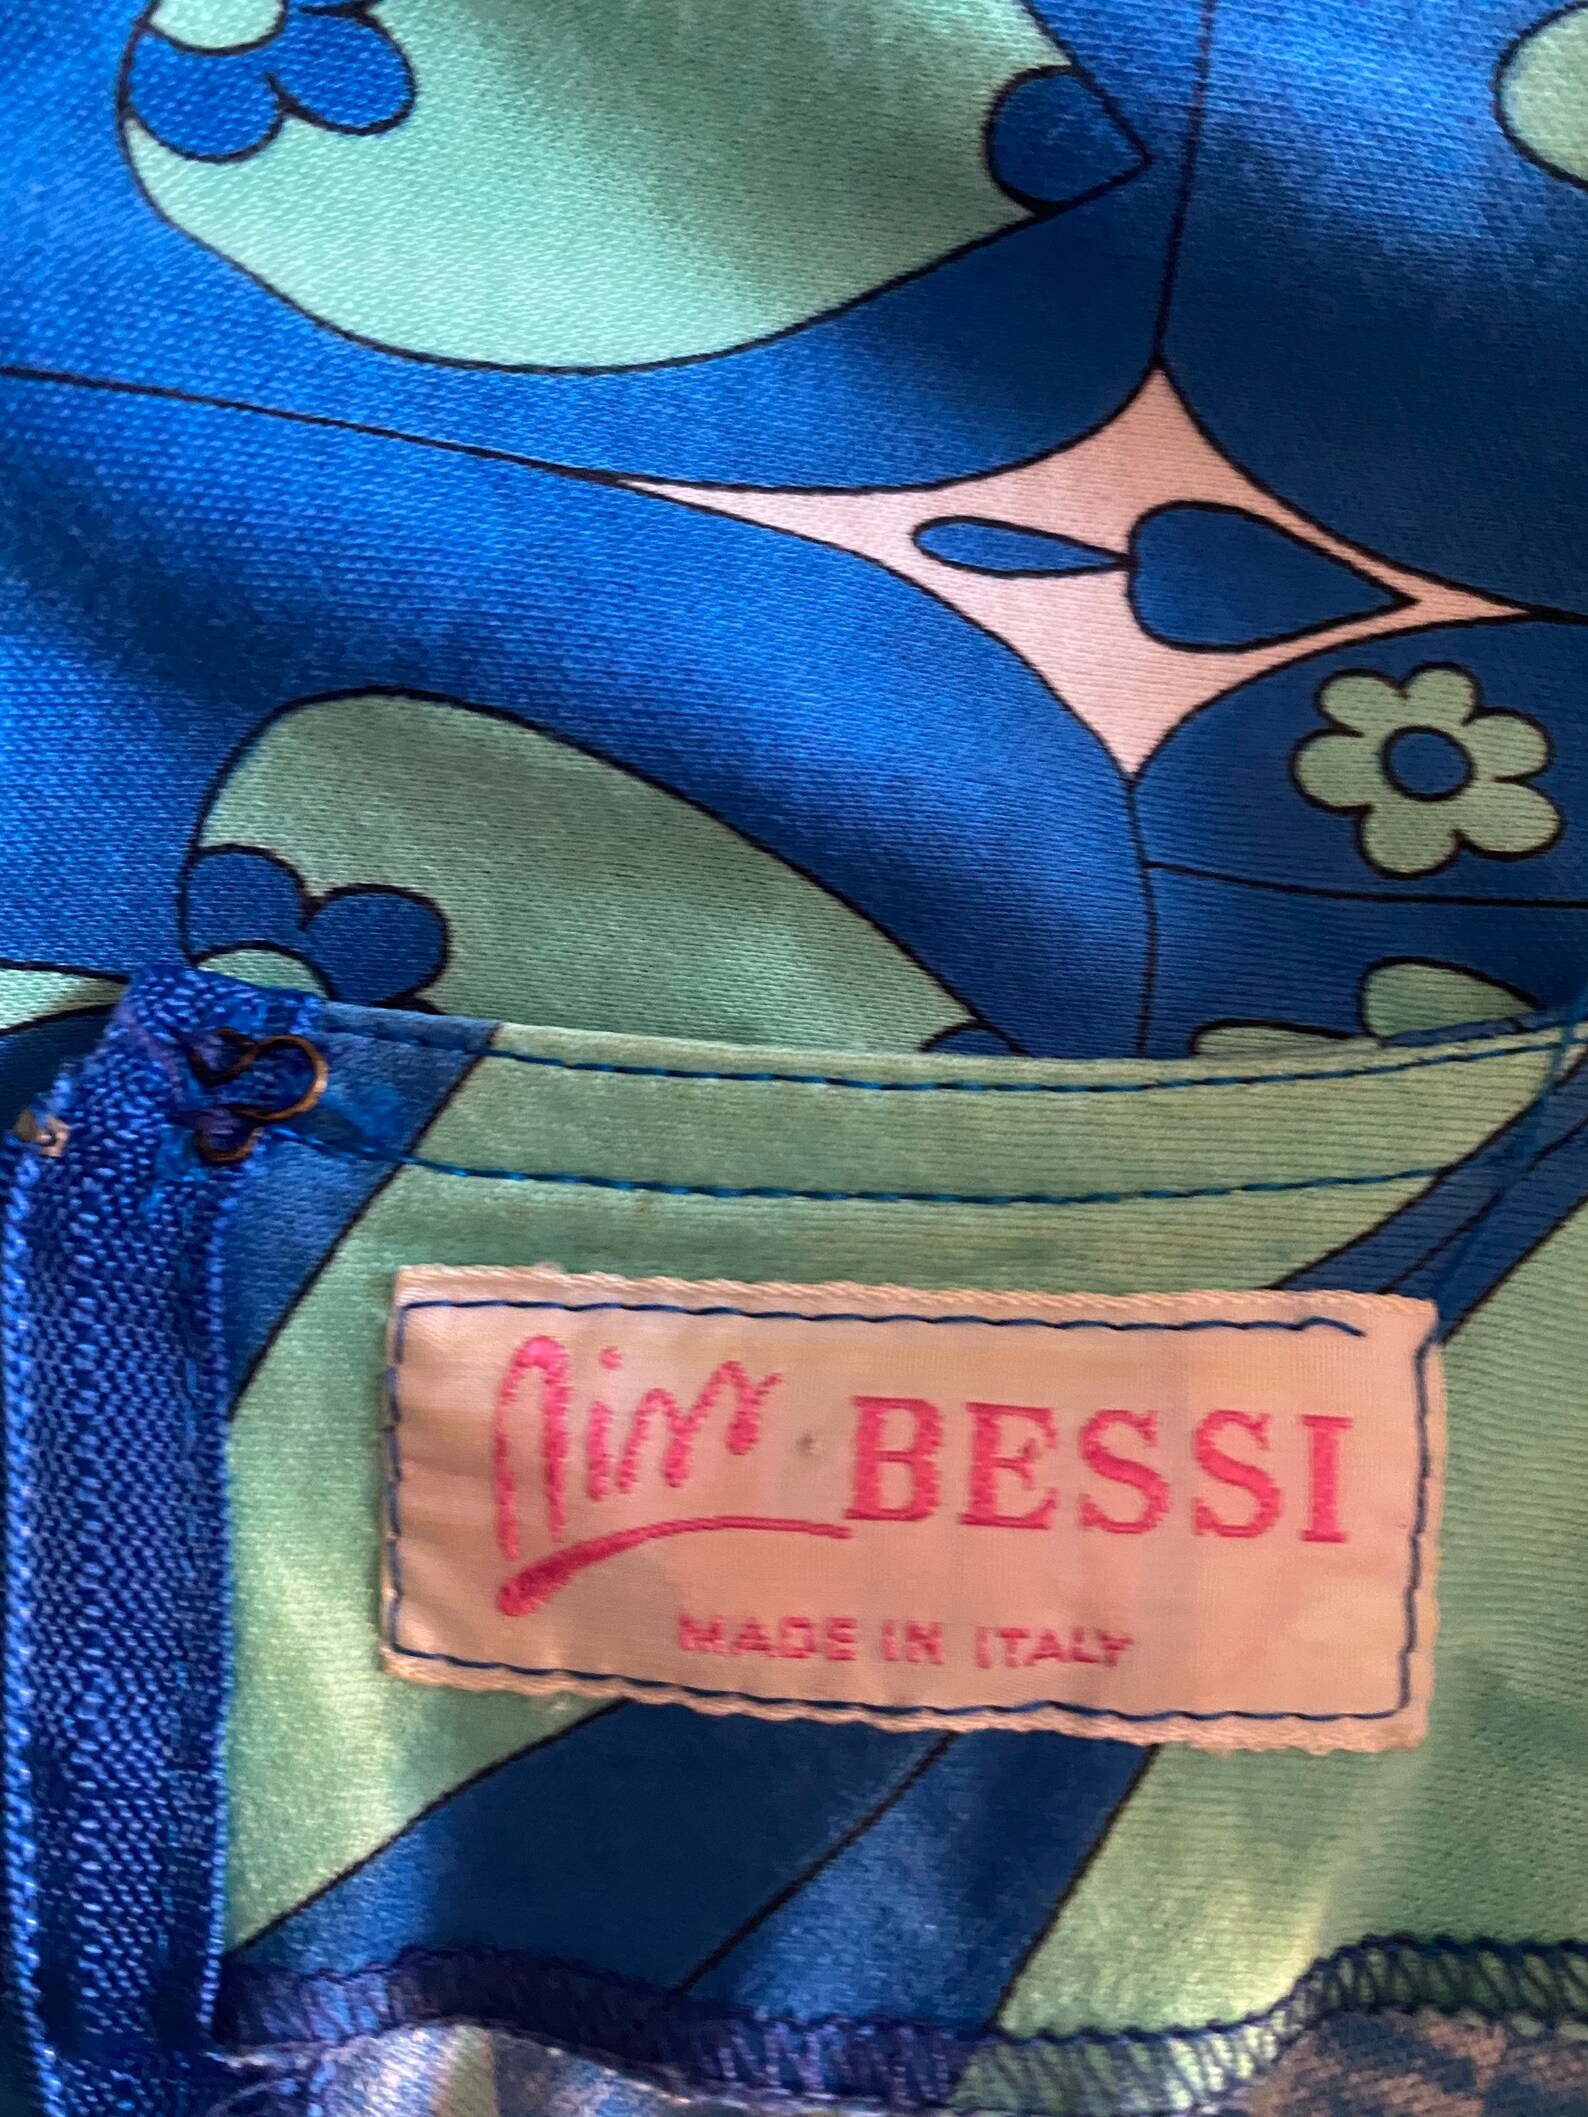 Averado Bessi Miss Bessi Vintage 1990s Cotton Bold Psychedelic Print ...